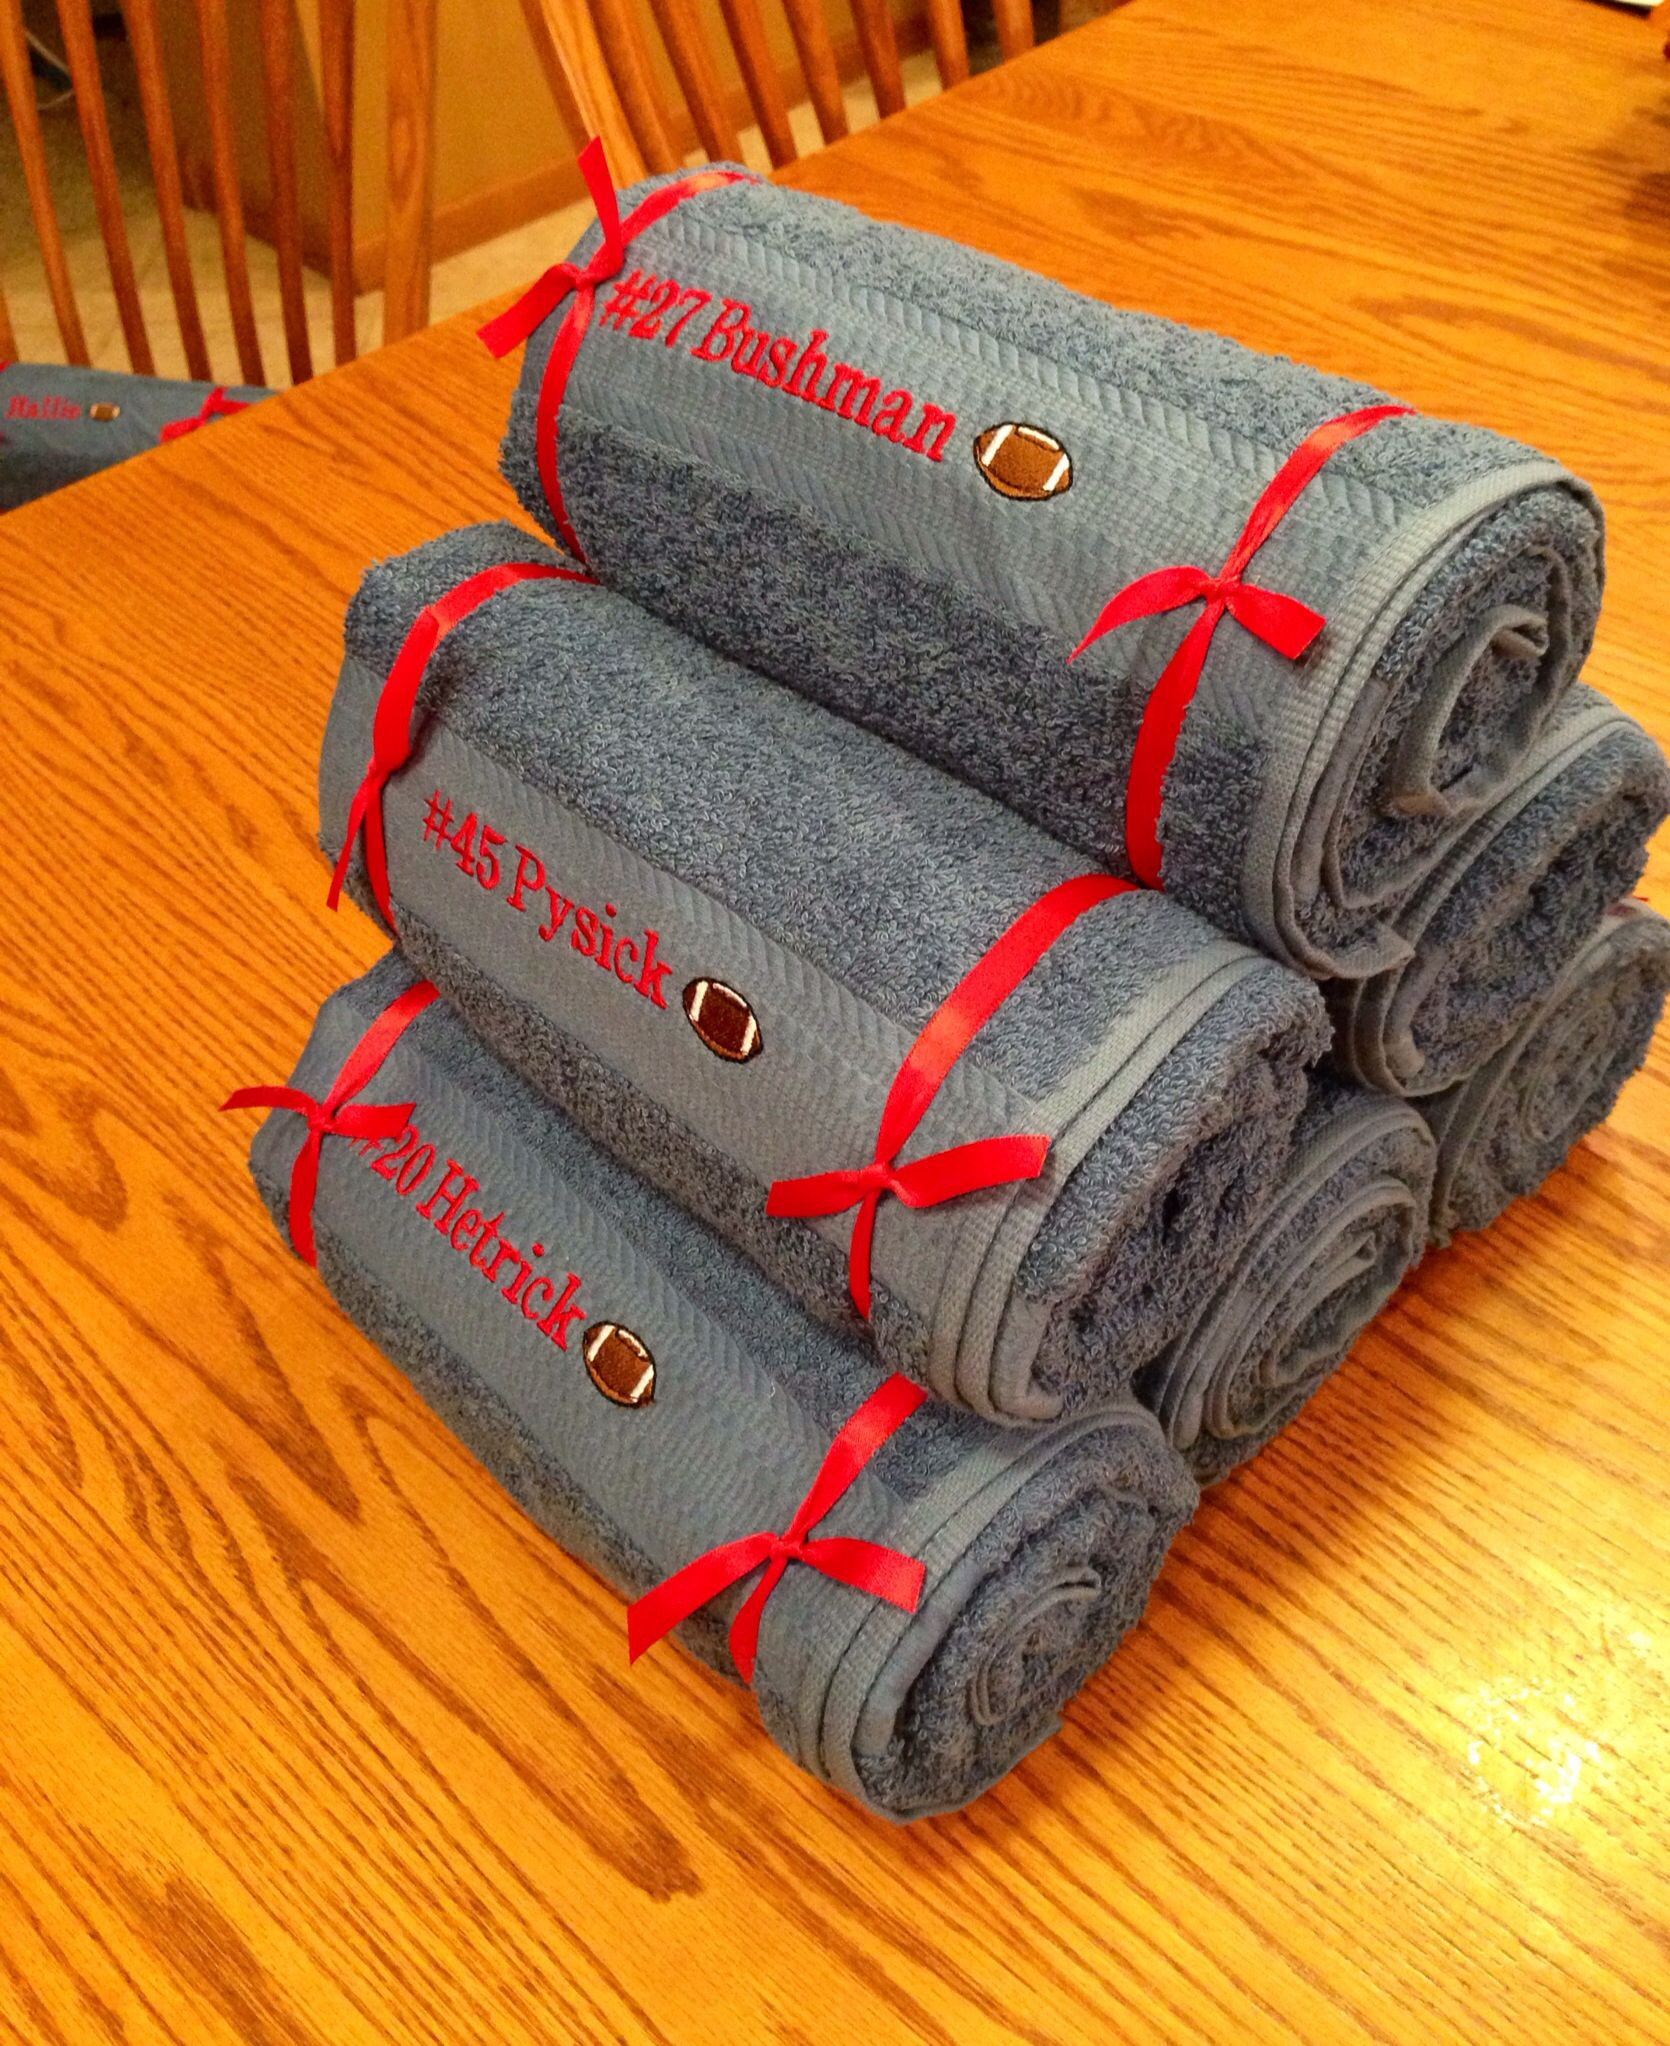 Senior Basketball Gift Ideas
 Senior football ts Embroidered bath towels Cost under